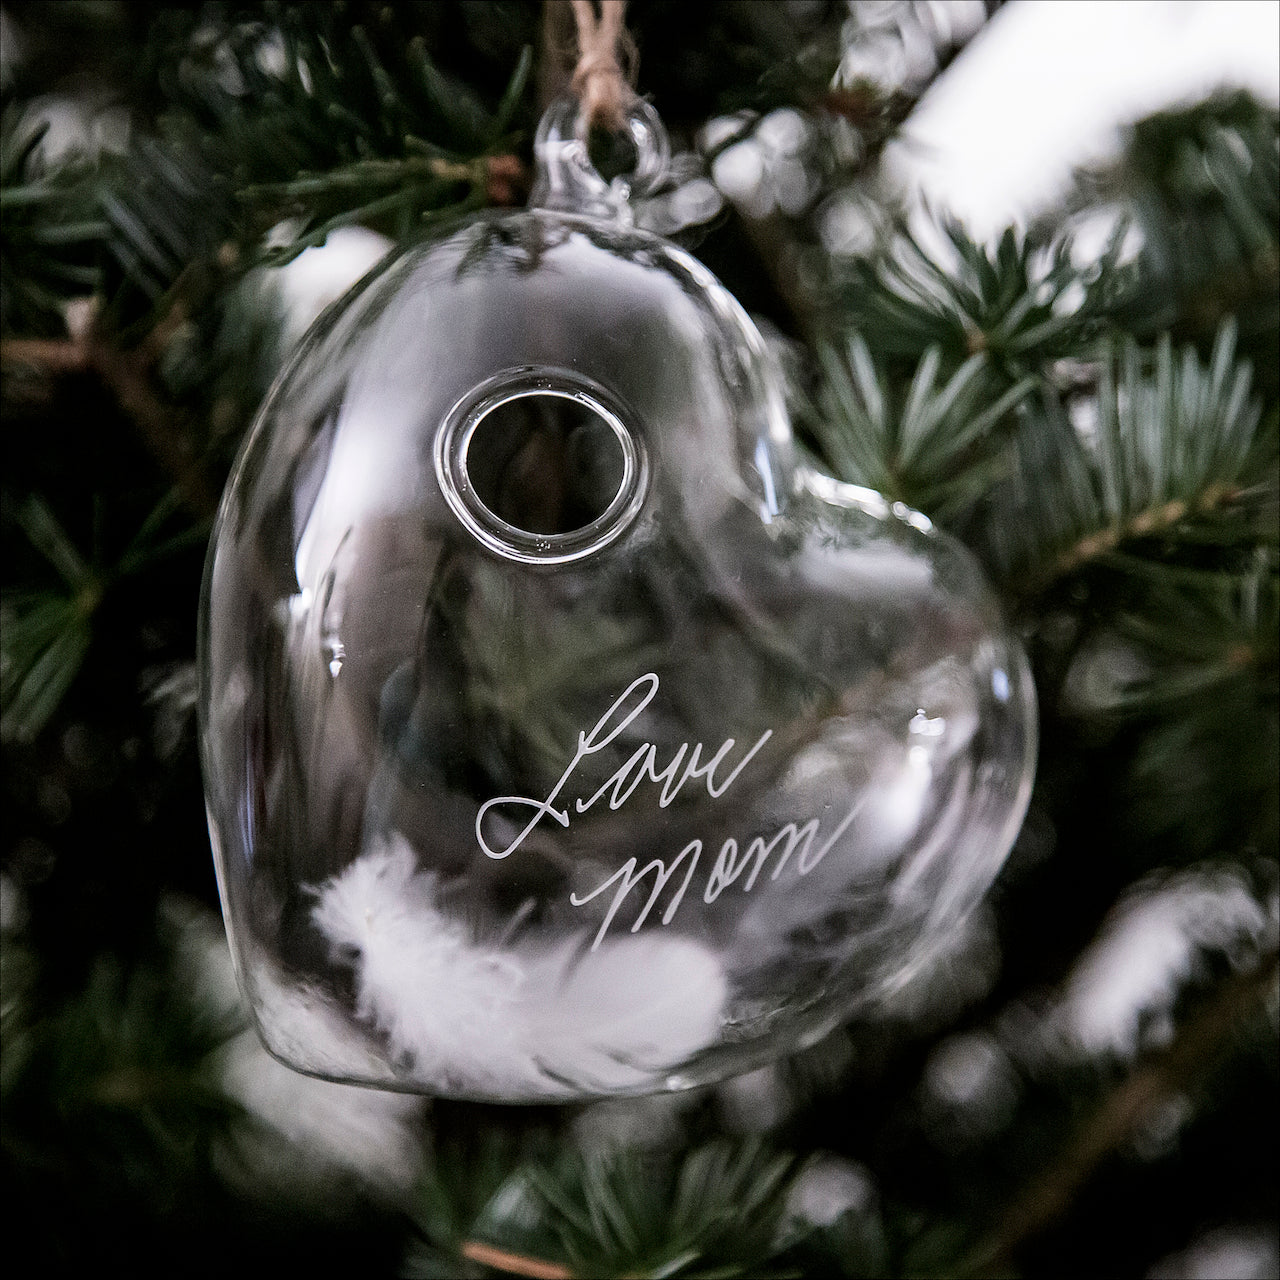 Ornaments (Glass) - Heart shaped